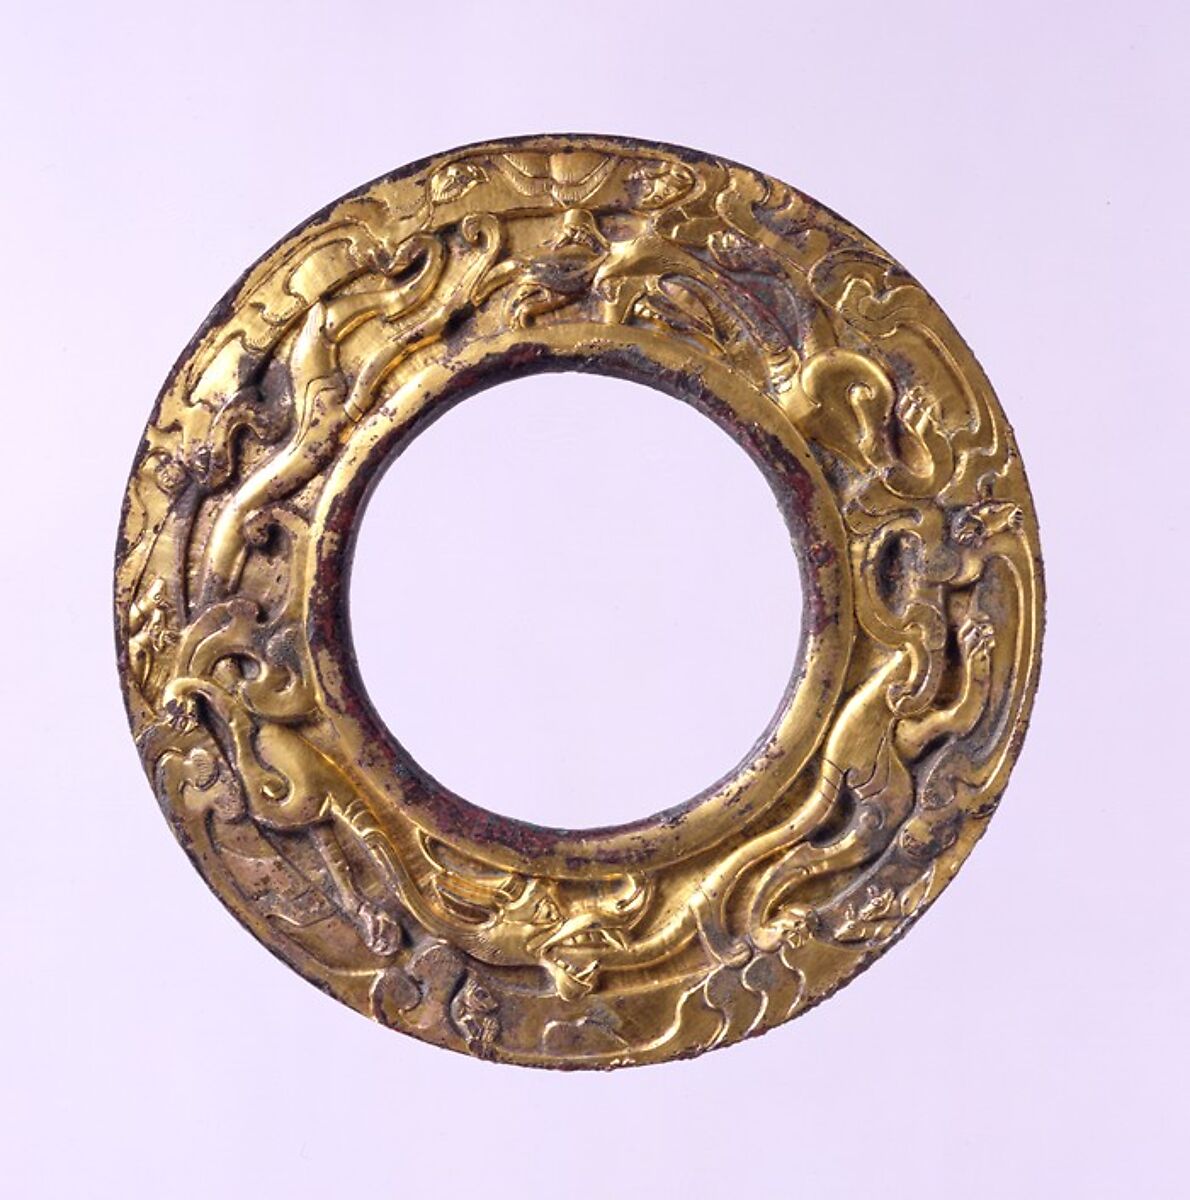 Bridle Fitting with Mythological Landscape, Gilded bronze, North China 